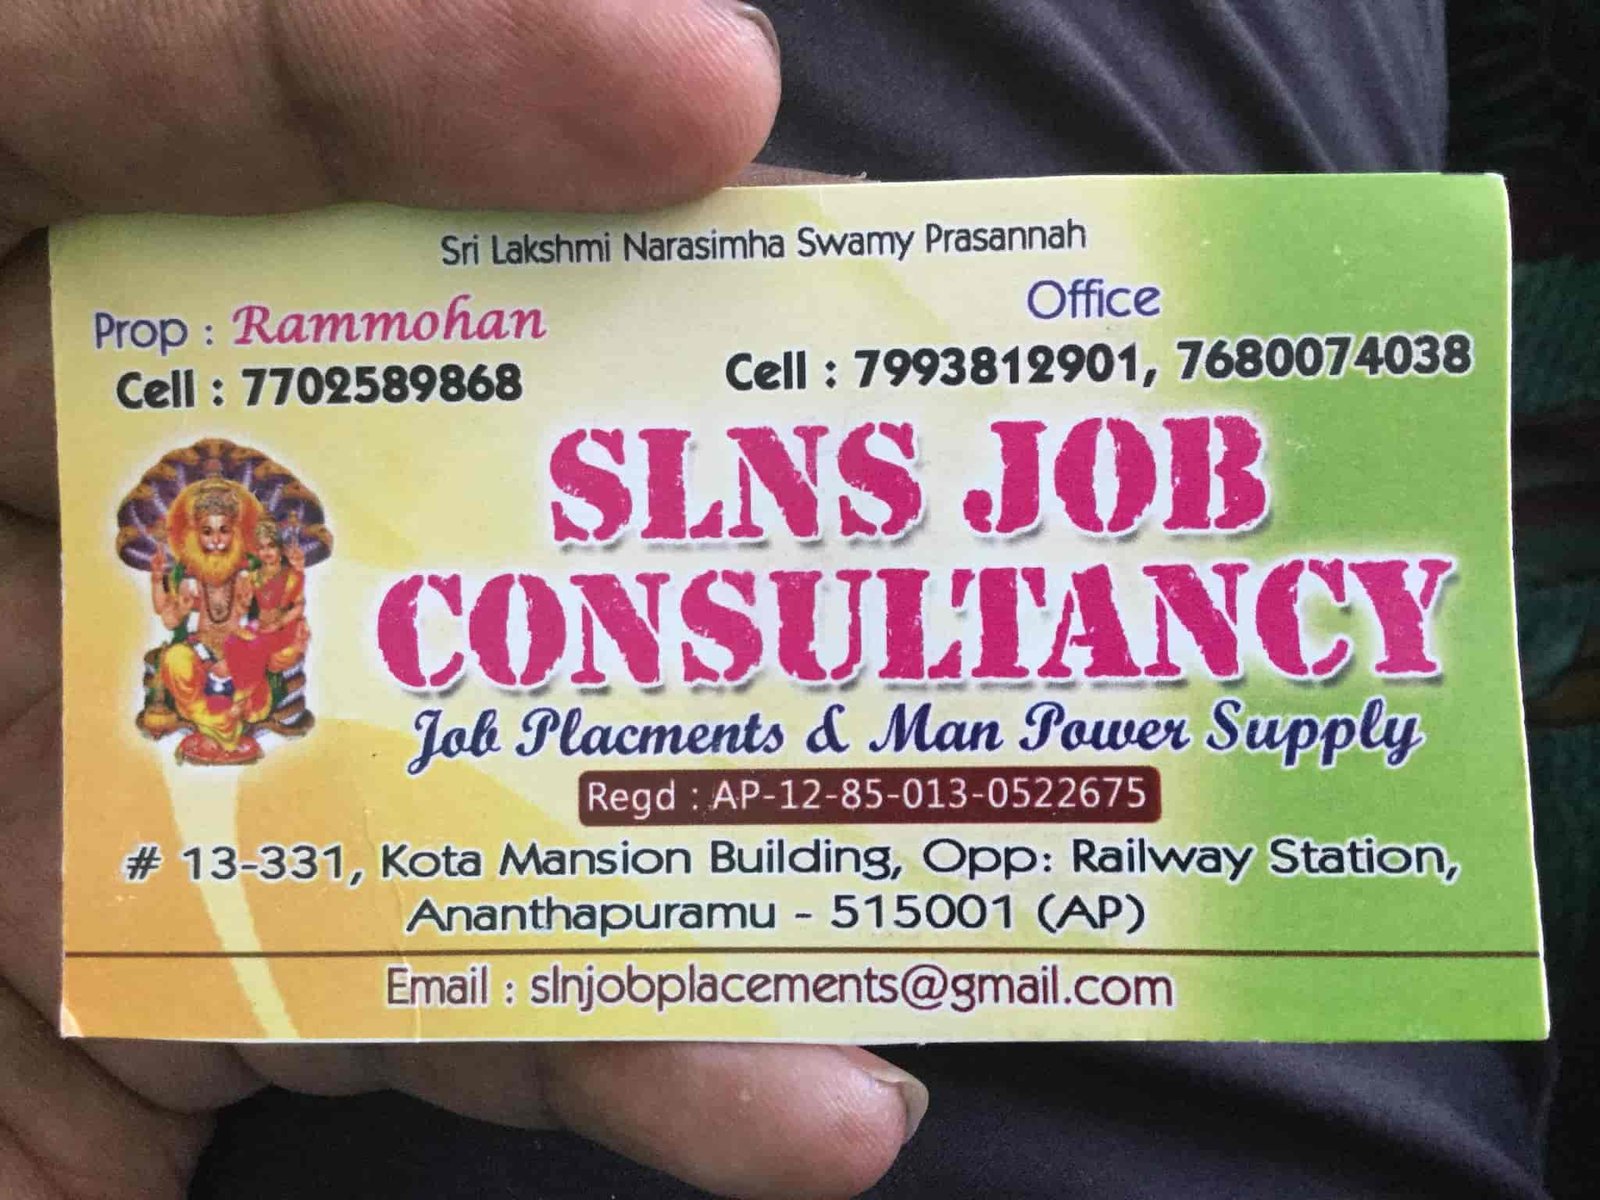 Slns job Consultancy